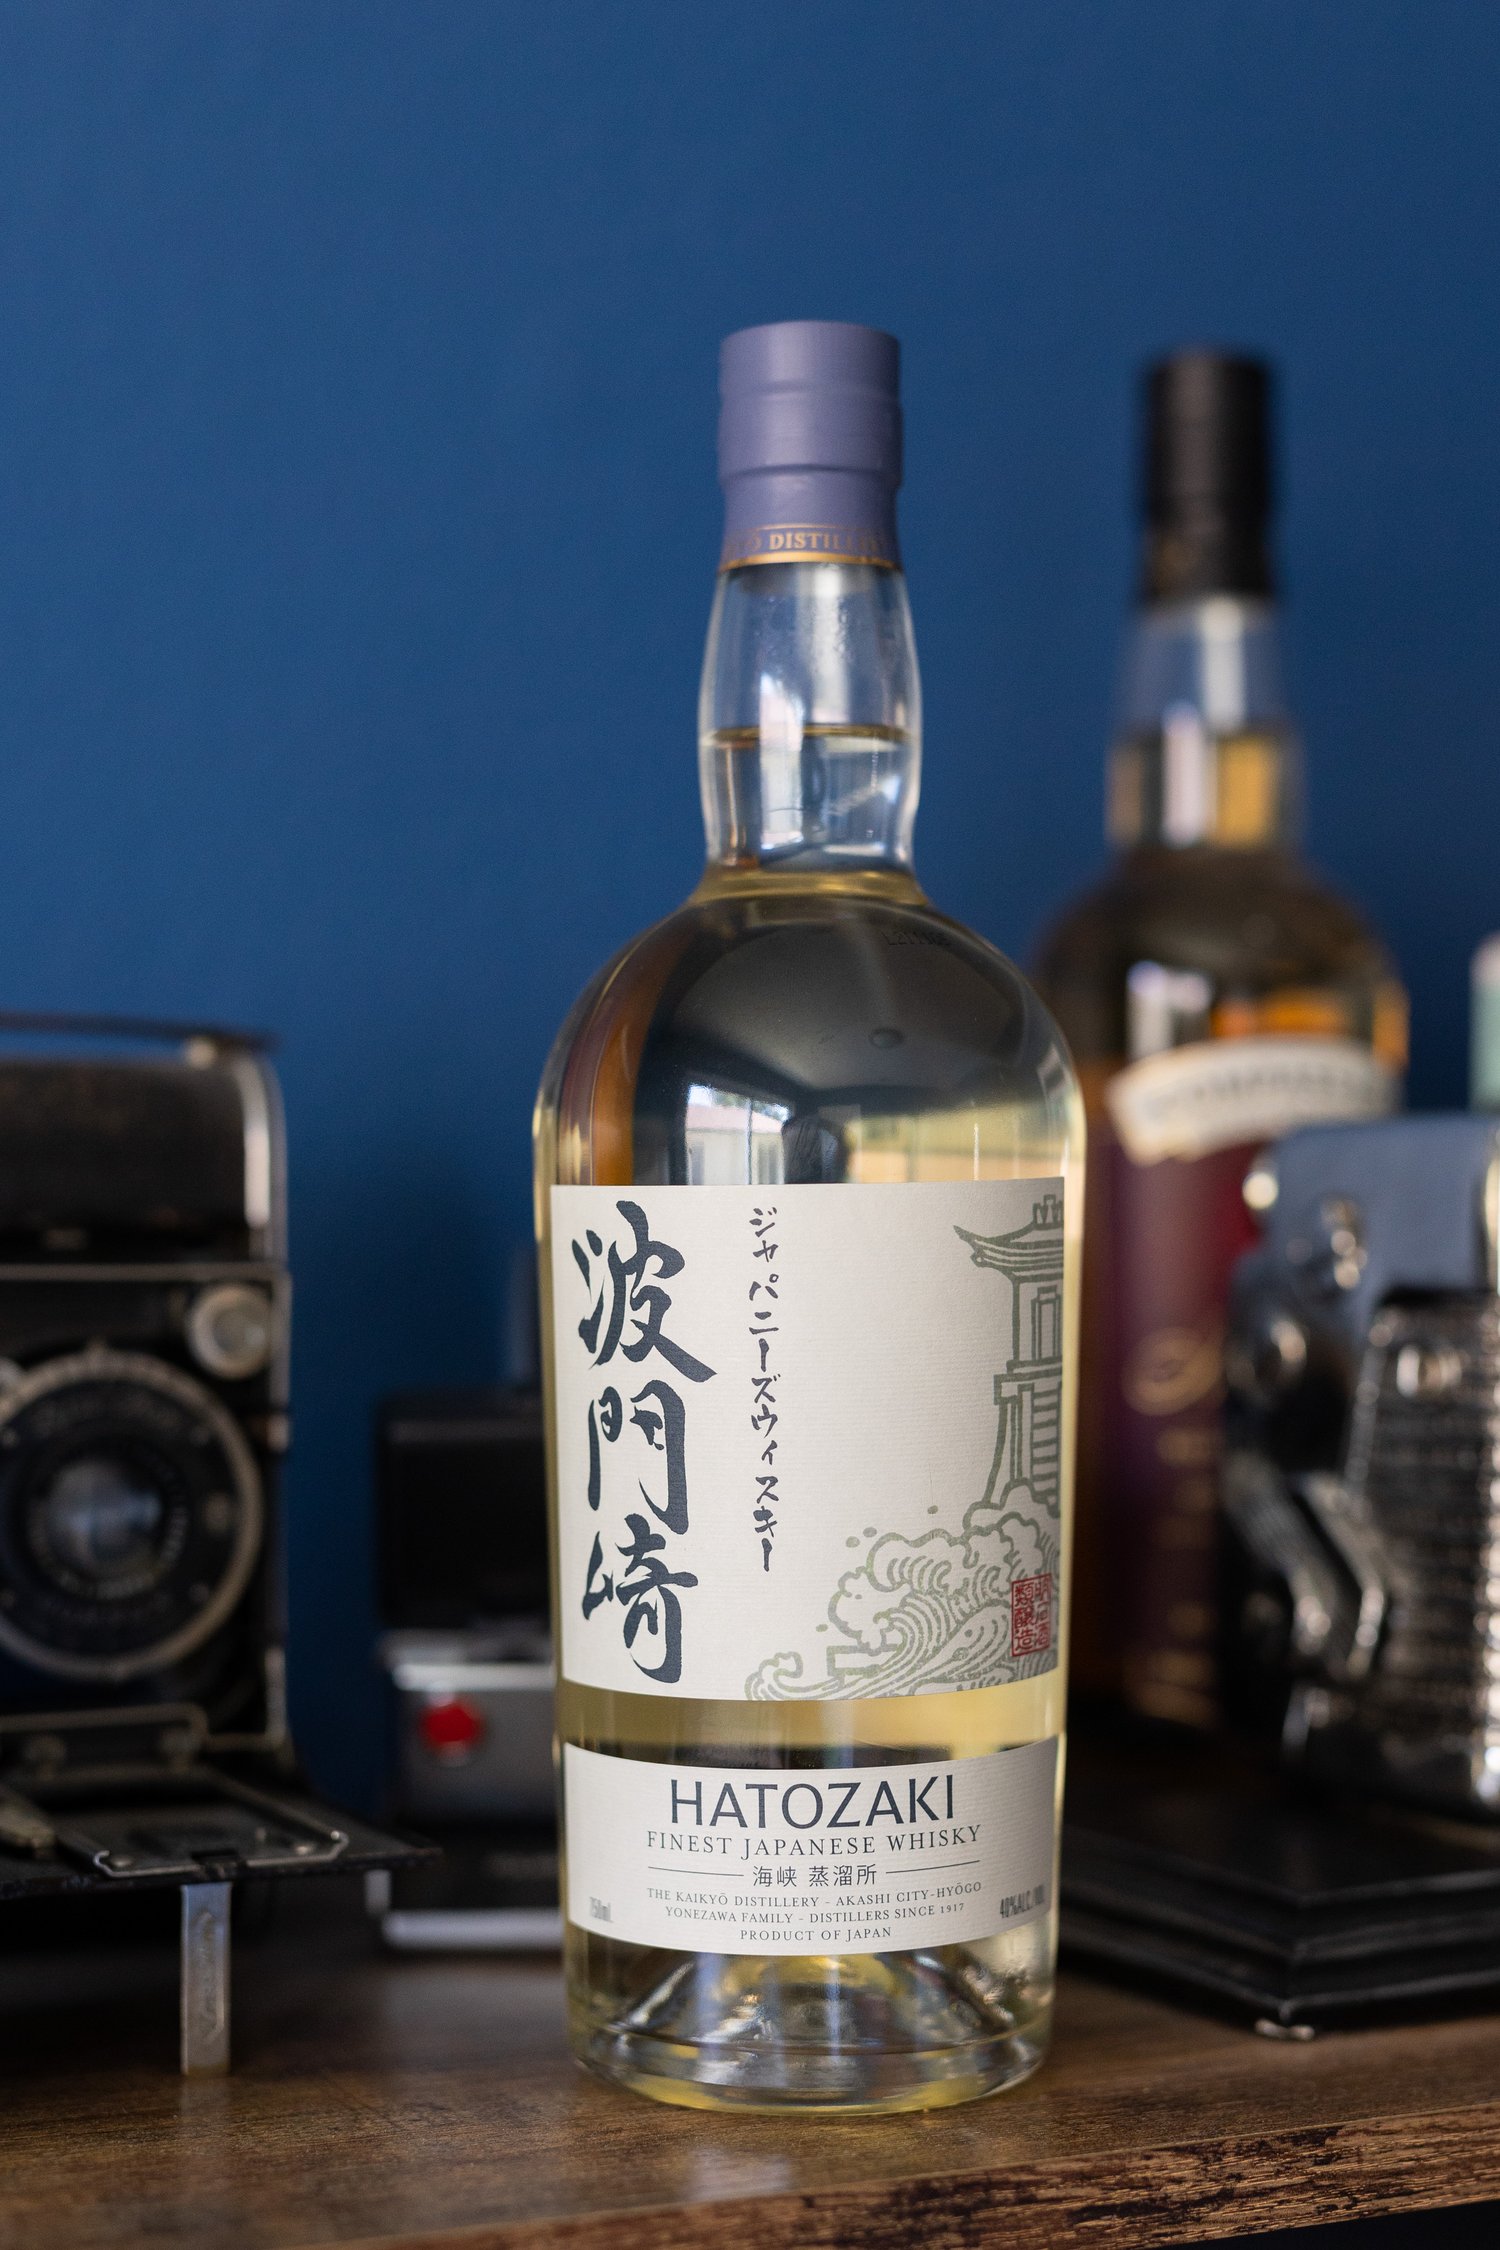 Hatozaki Finest Japanese Whisky Whisky — The Study Review